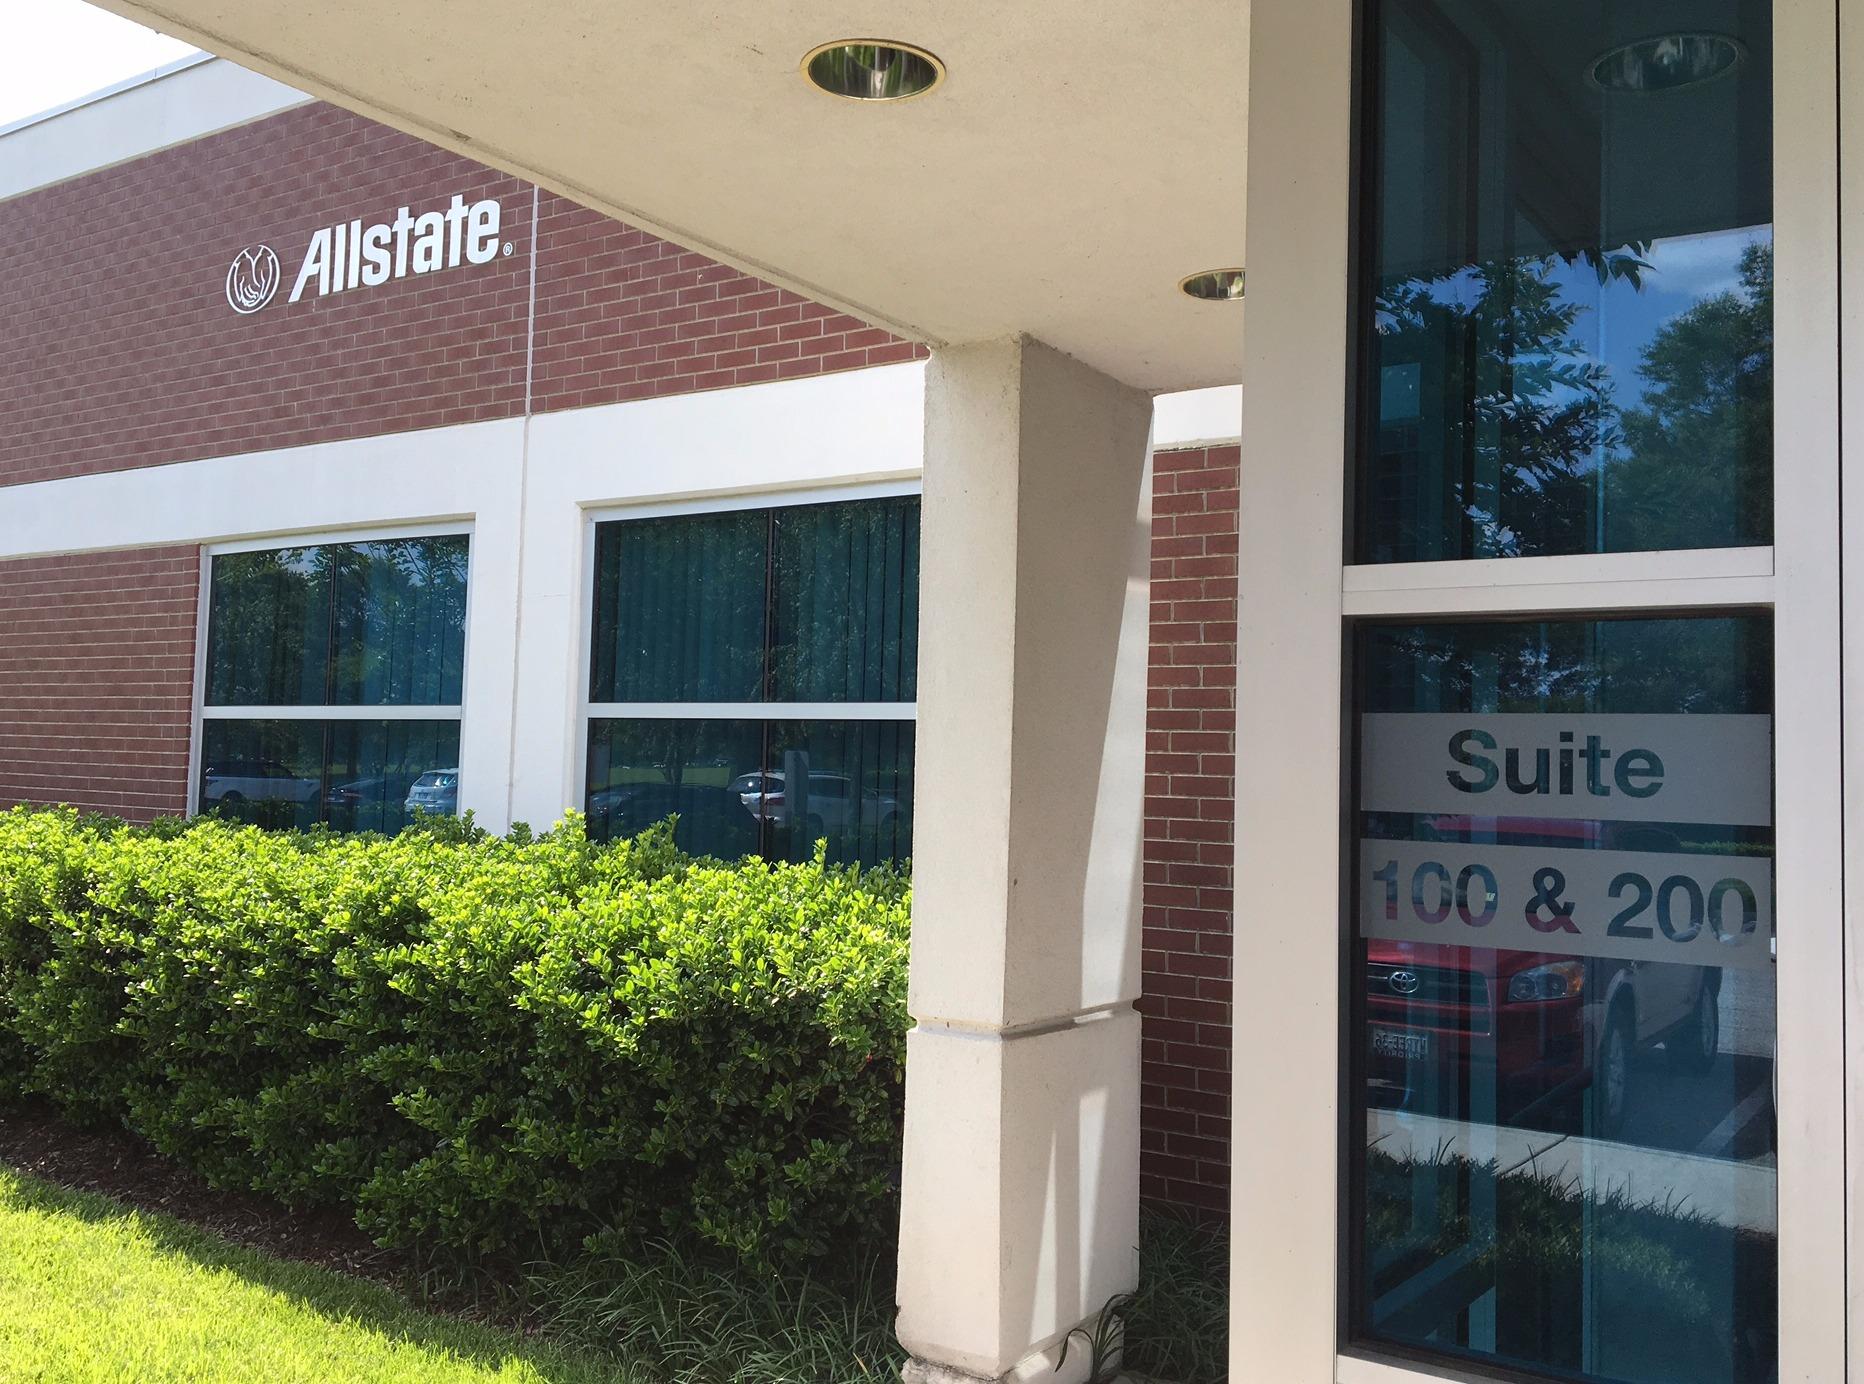 Allstate | Car Insurance in Chesapeake, VA - Lee Ann Sullivan